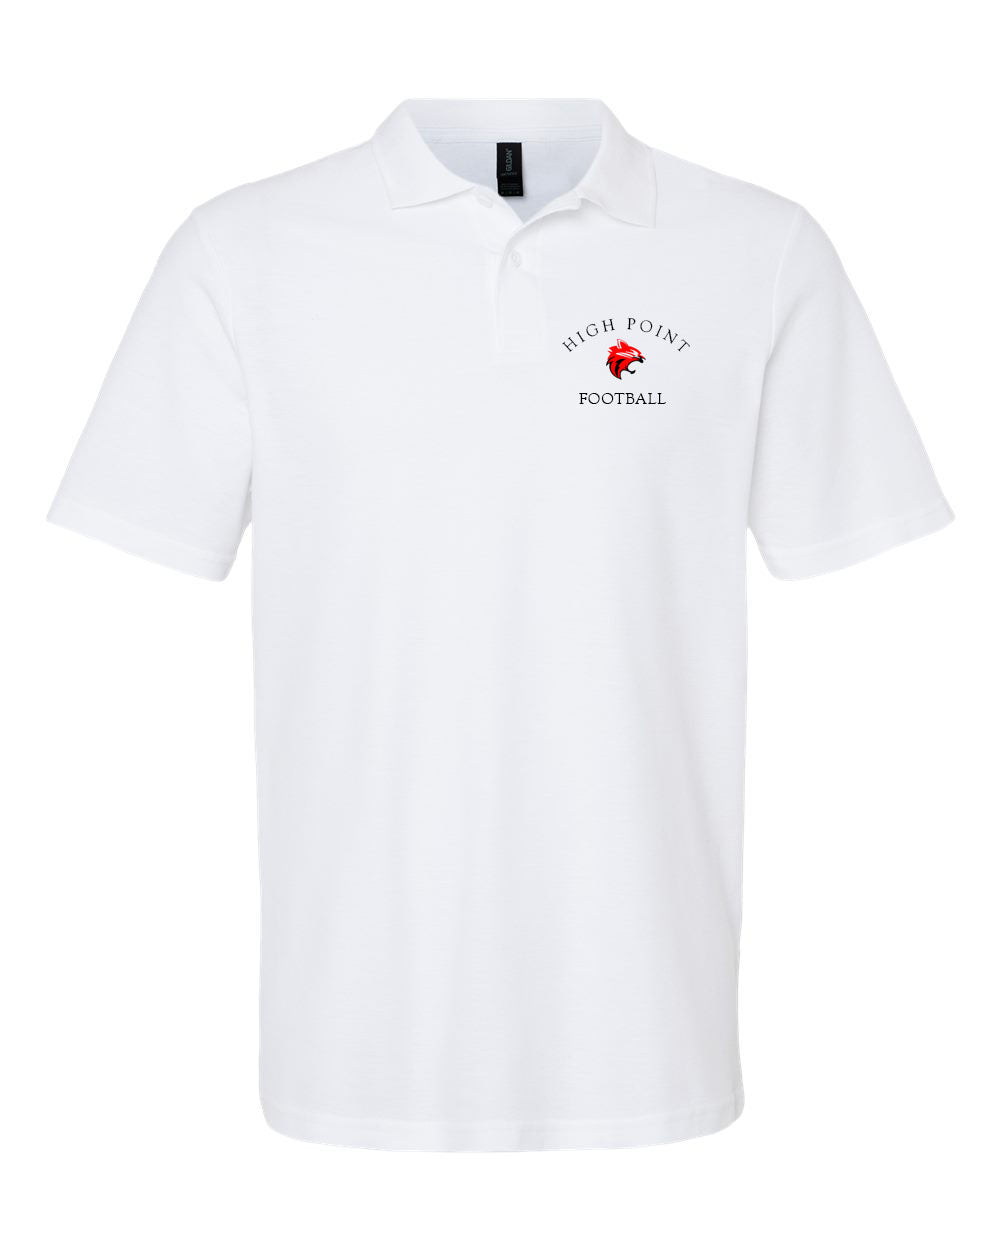 High Point Football Design 3 Polo T-Shirt